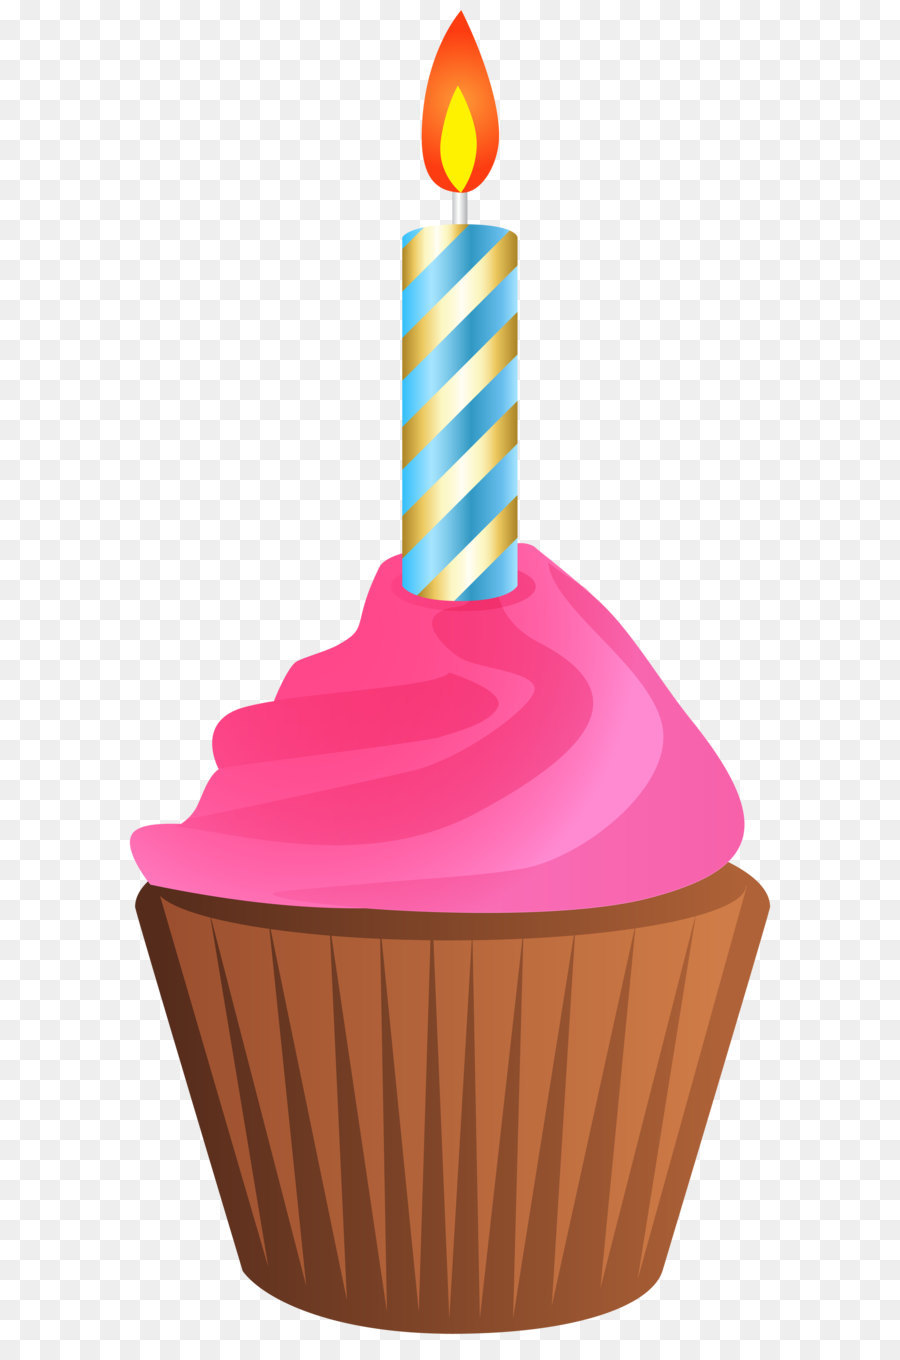 Free Birthday Cake Clip Art Transparent Background, Download Free